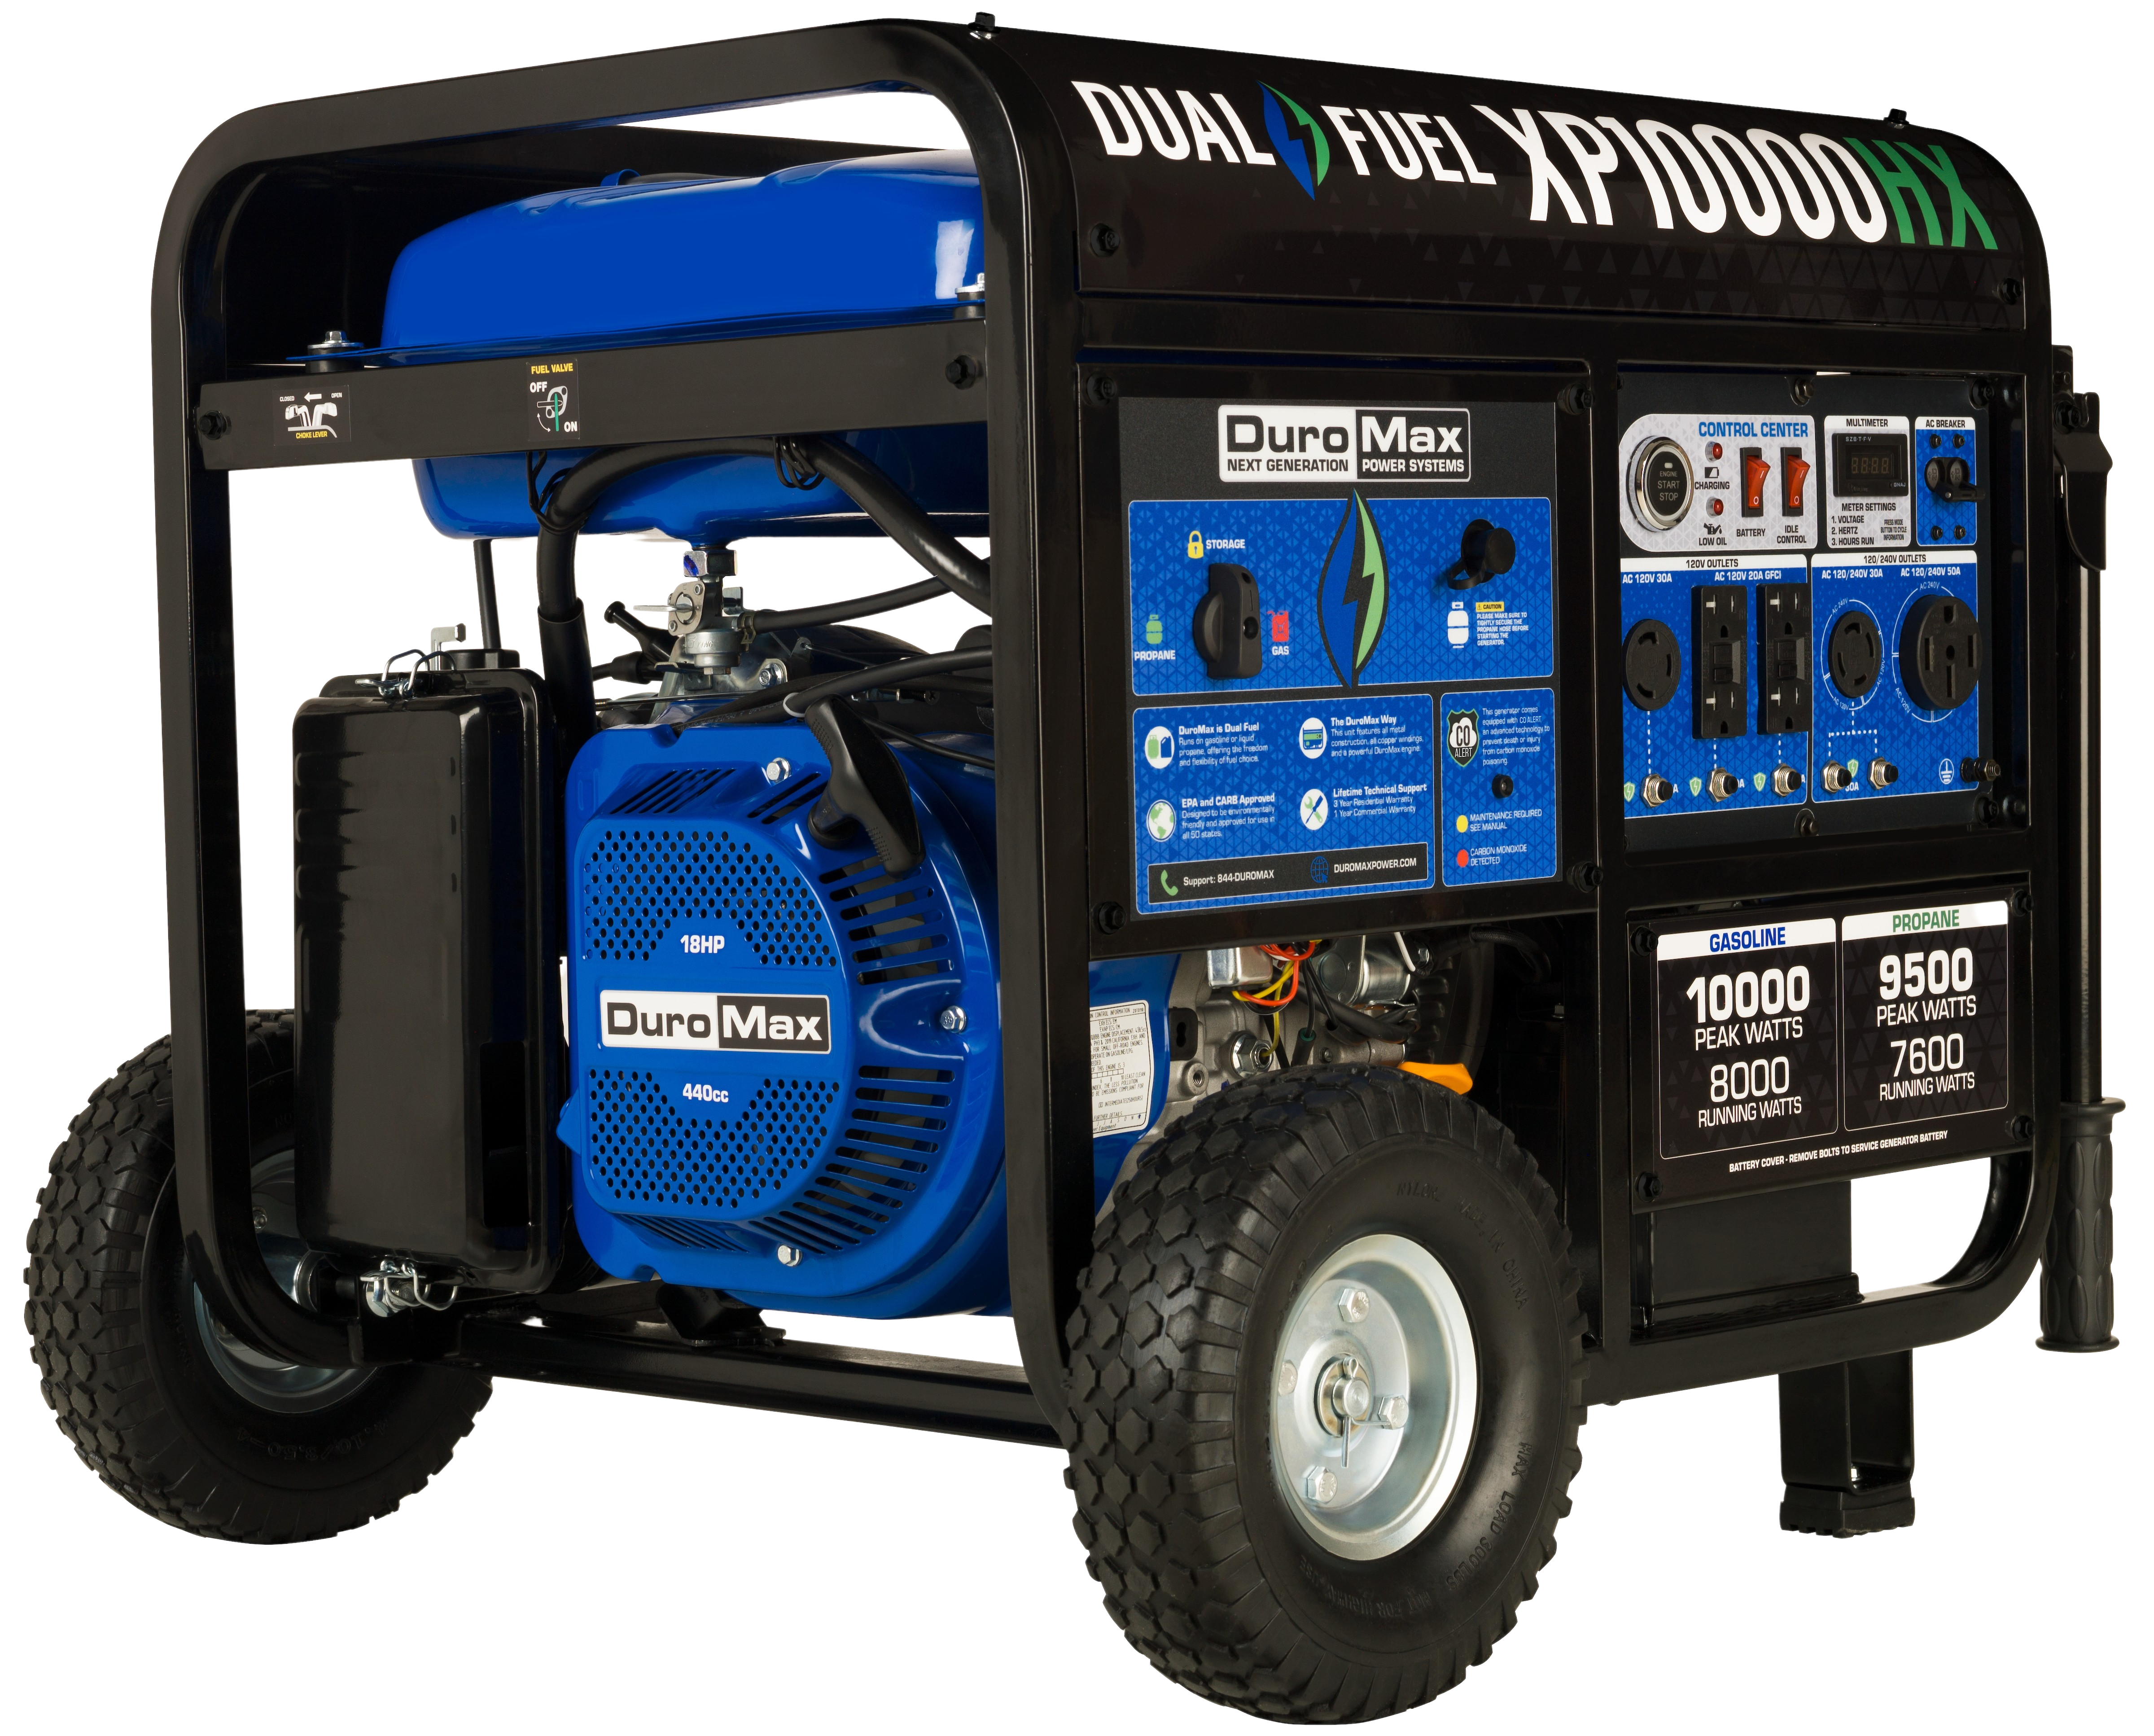 Duromax, DuroMax XP10000HX 8000W/10000W Dual Fuel CO Alert Electric Start Generator New